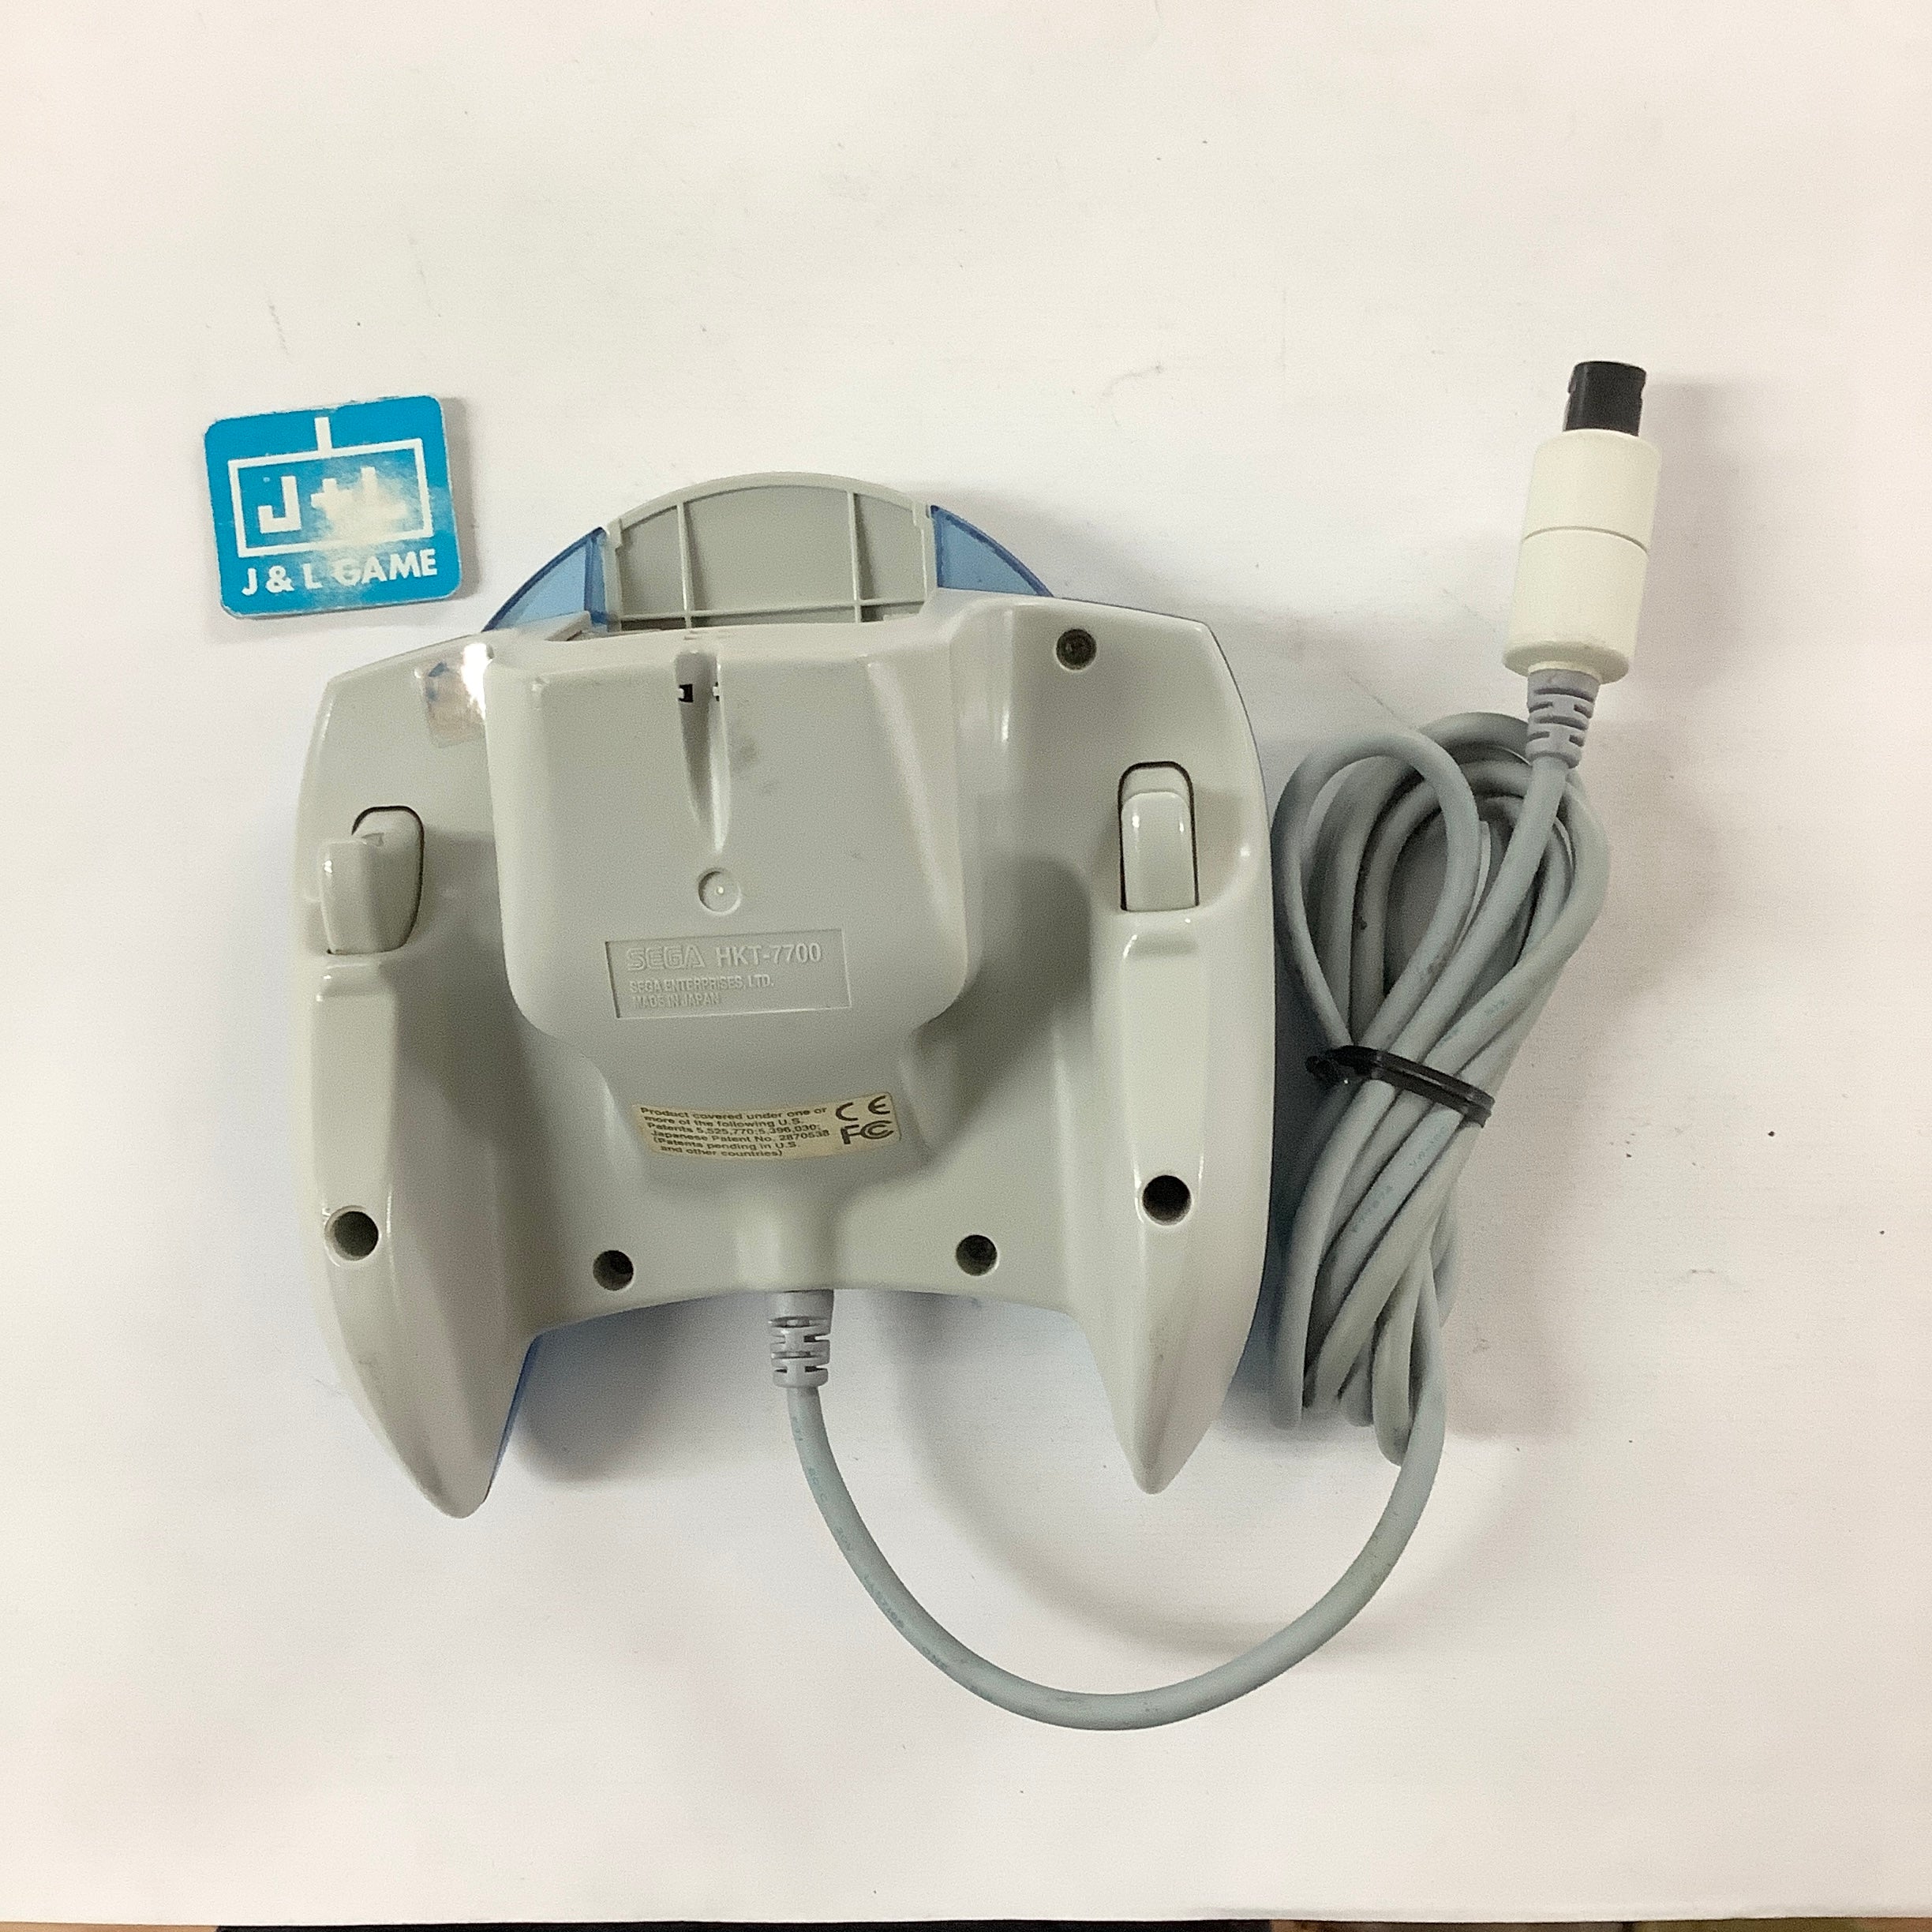 Sega Dreamcast Controller (Clear Blue) - Sega Dreamcast [Pre-Owned]